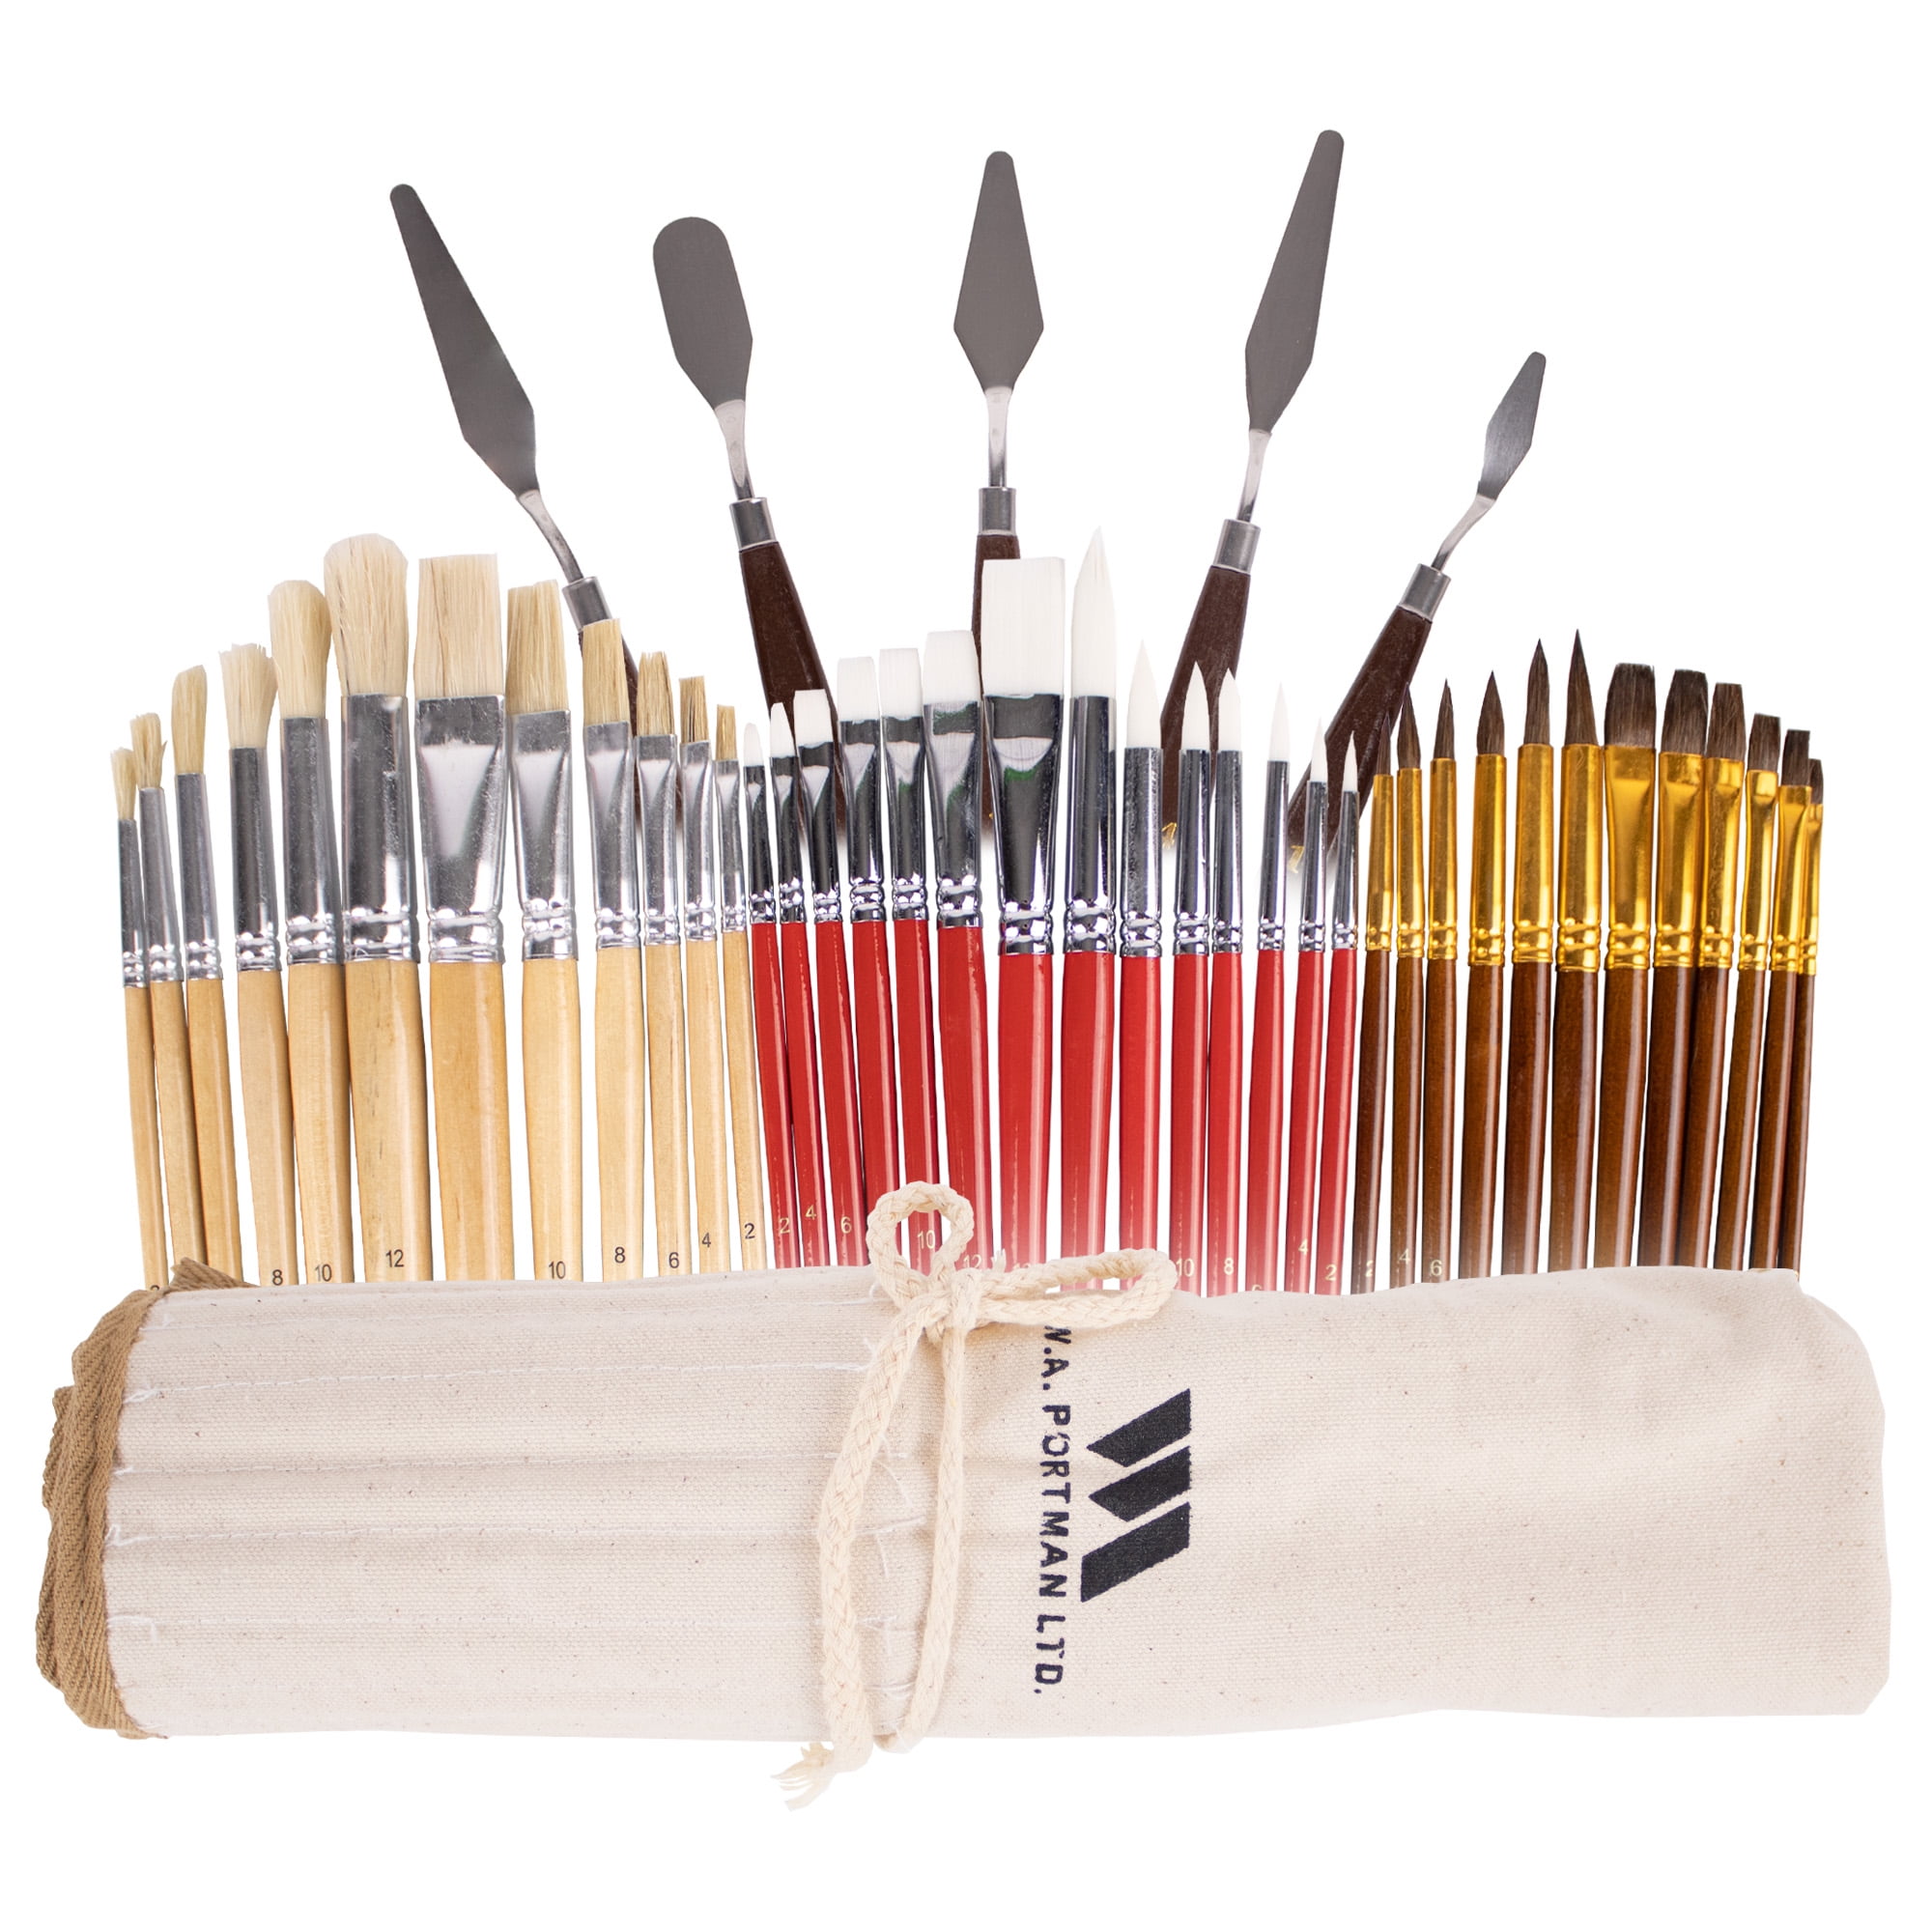 Shuttle Art Artist Paint Brush Set,18 Pcs Different Shapes & Sizes Paint Brushes Bonus Palette Knife & Sponge for Acrylic, Watercolor, Oil and Gouache